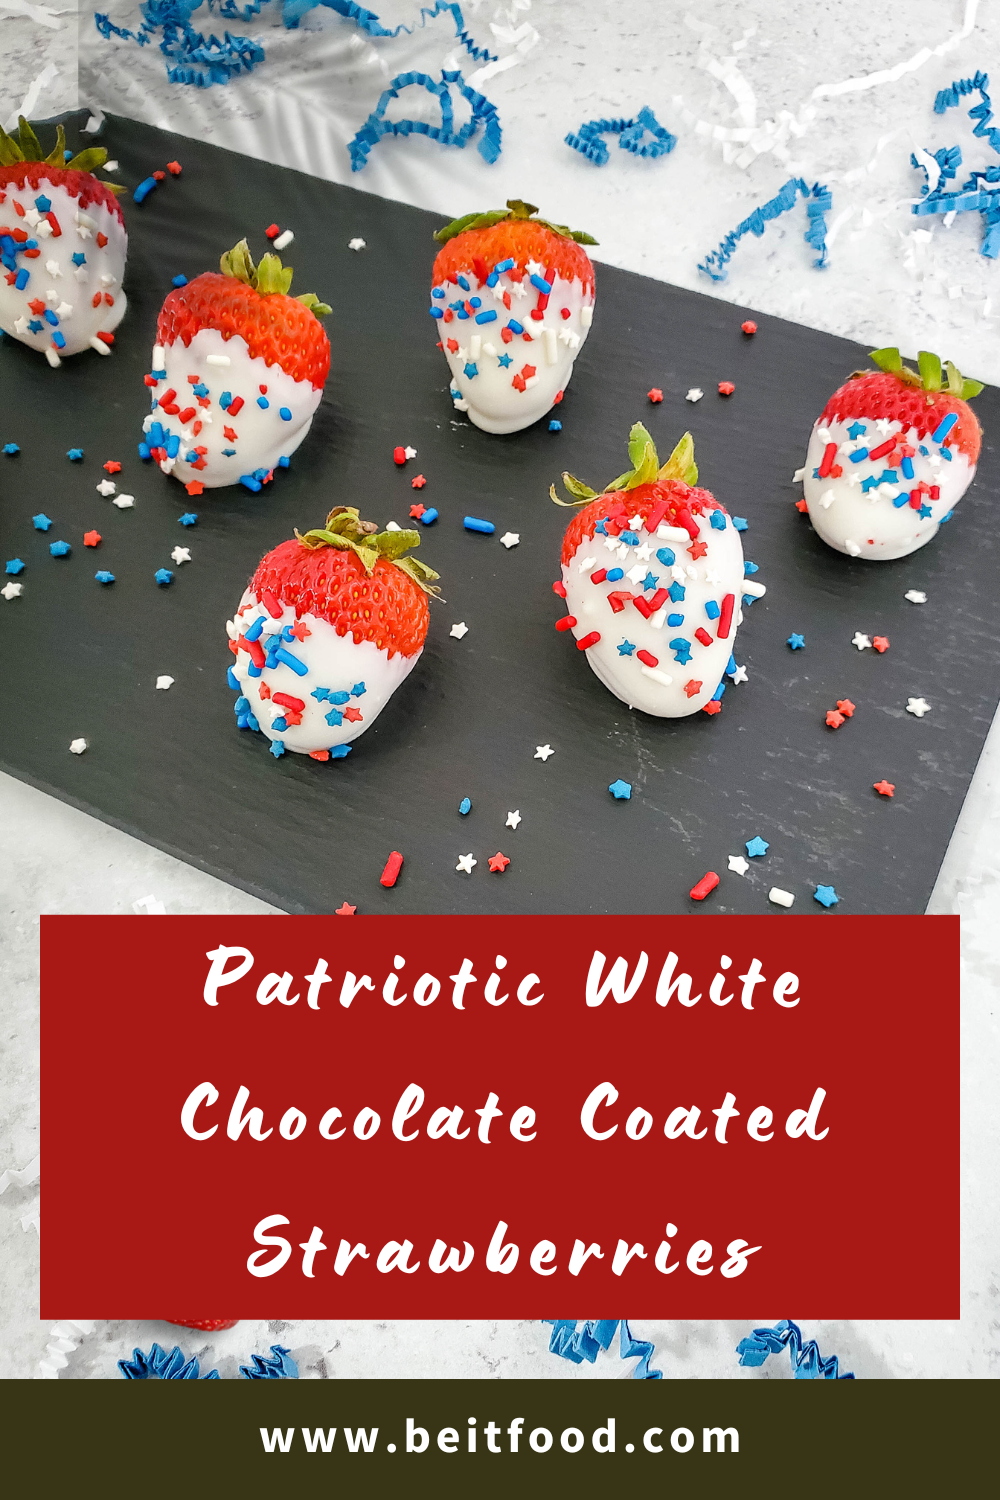 Patriotic White Chocolate Coated Strawberries